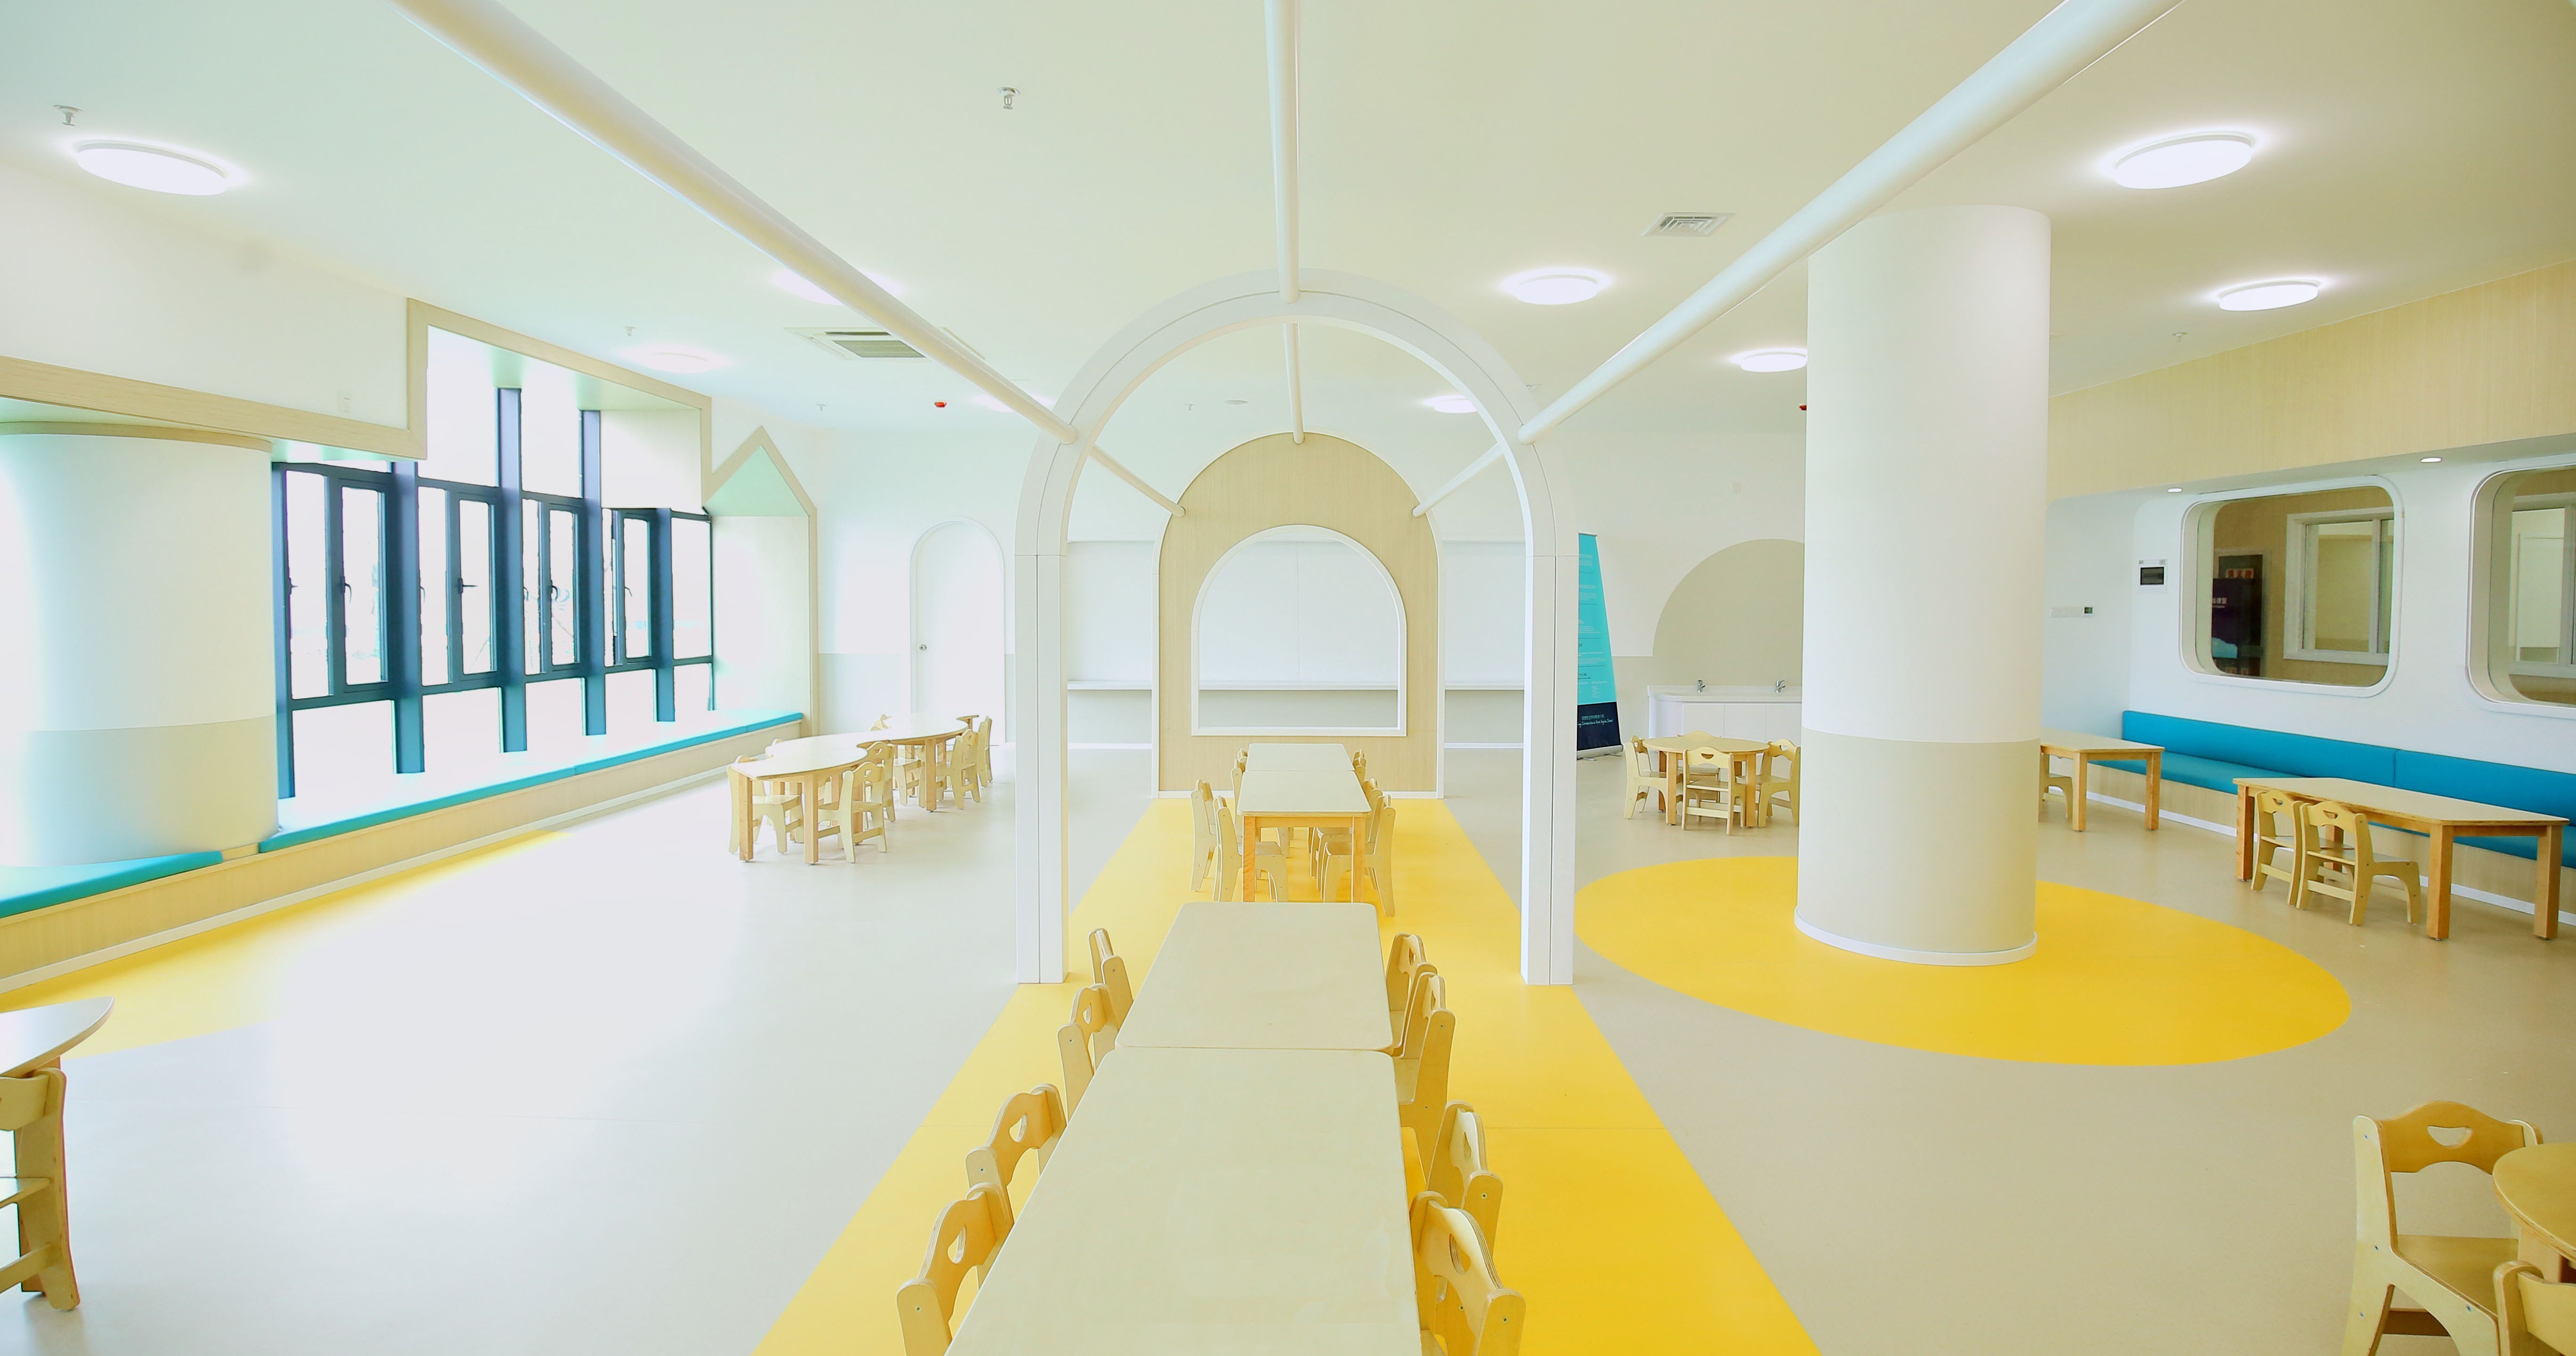 Nord Anglia Jiaxing Kindergarten - aotu architecture office ltd.